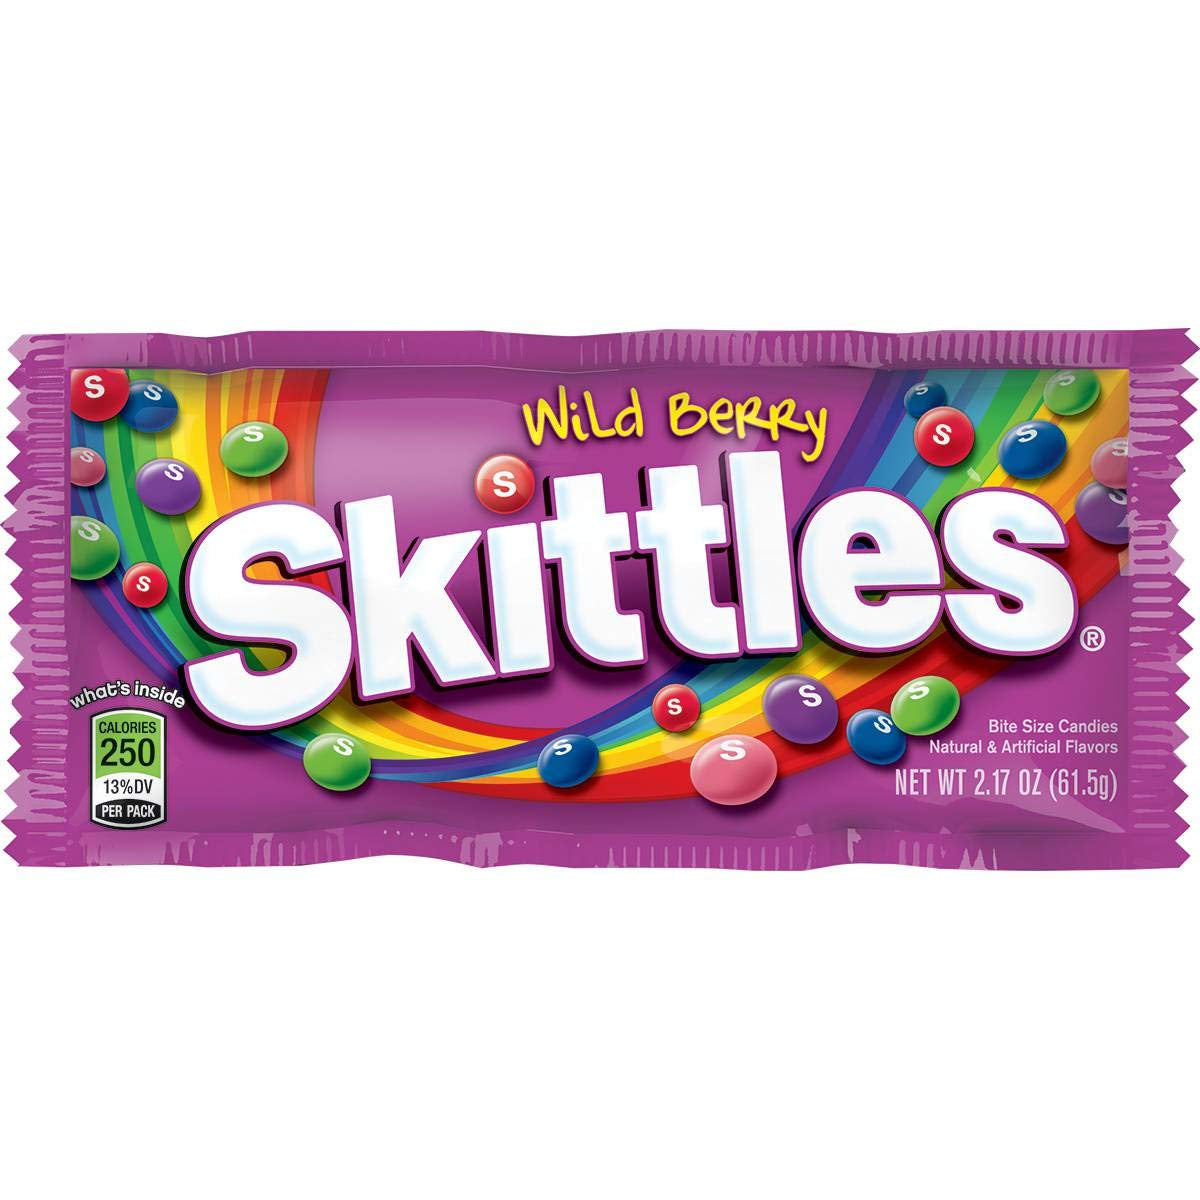 SKITTLES Wild Berry 2.17 oz